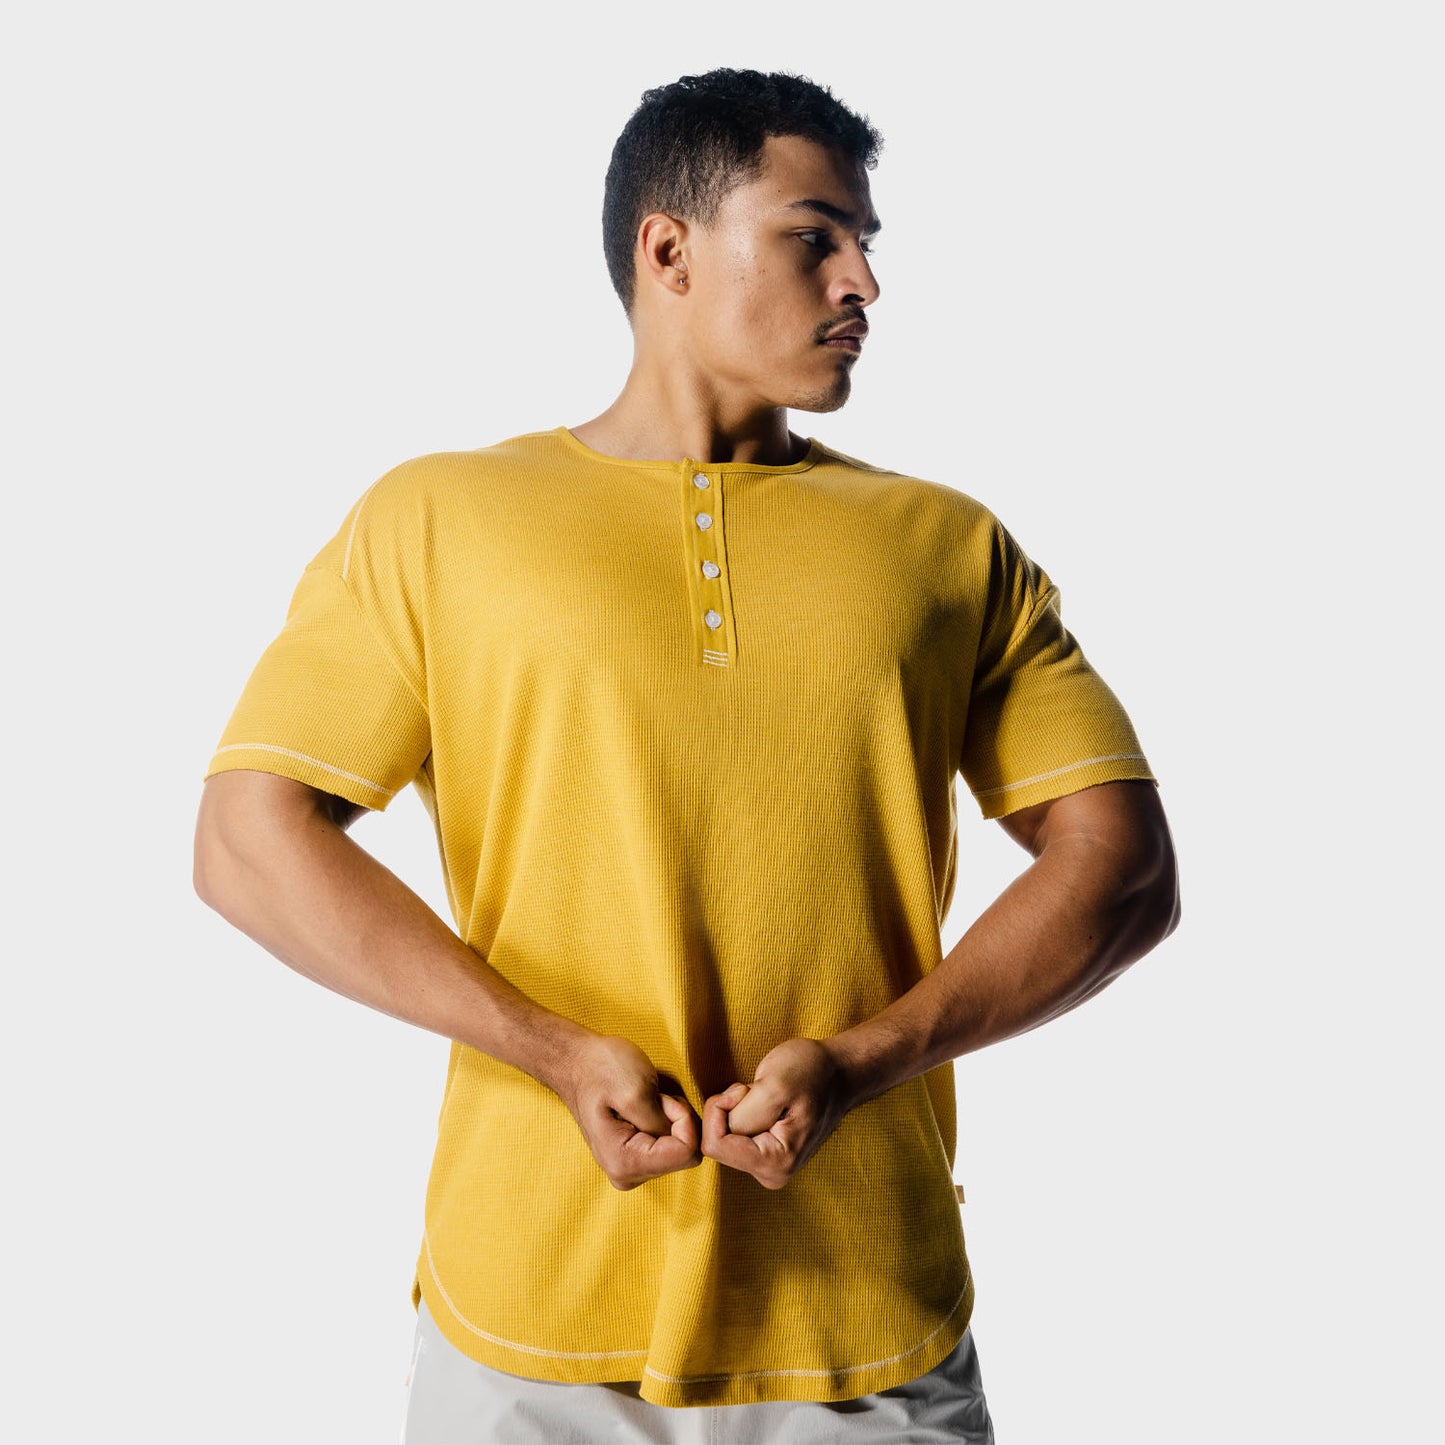 squatwolf-workout-shirts-golden-era-waffle-top-lemon-curry-gym-wear-for-men